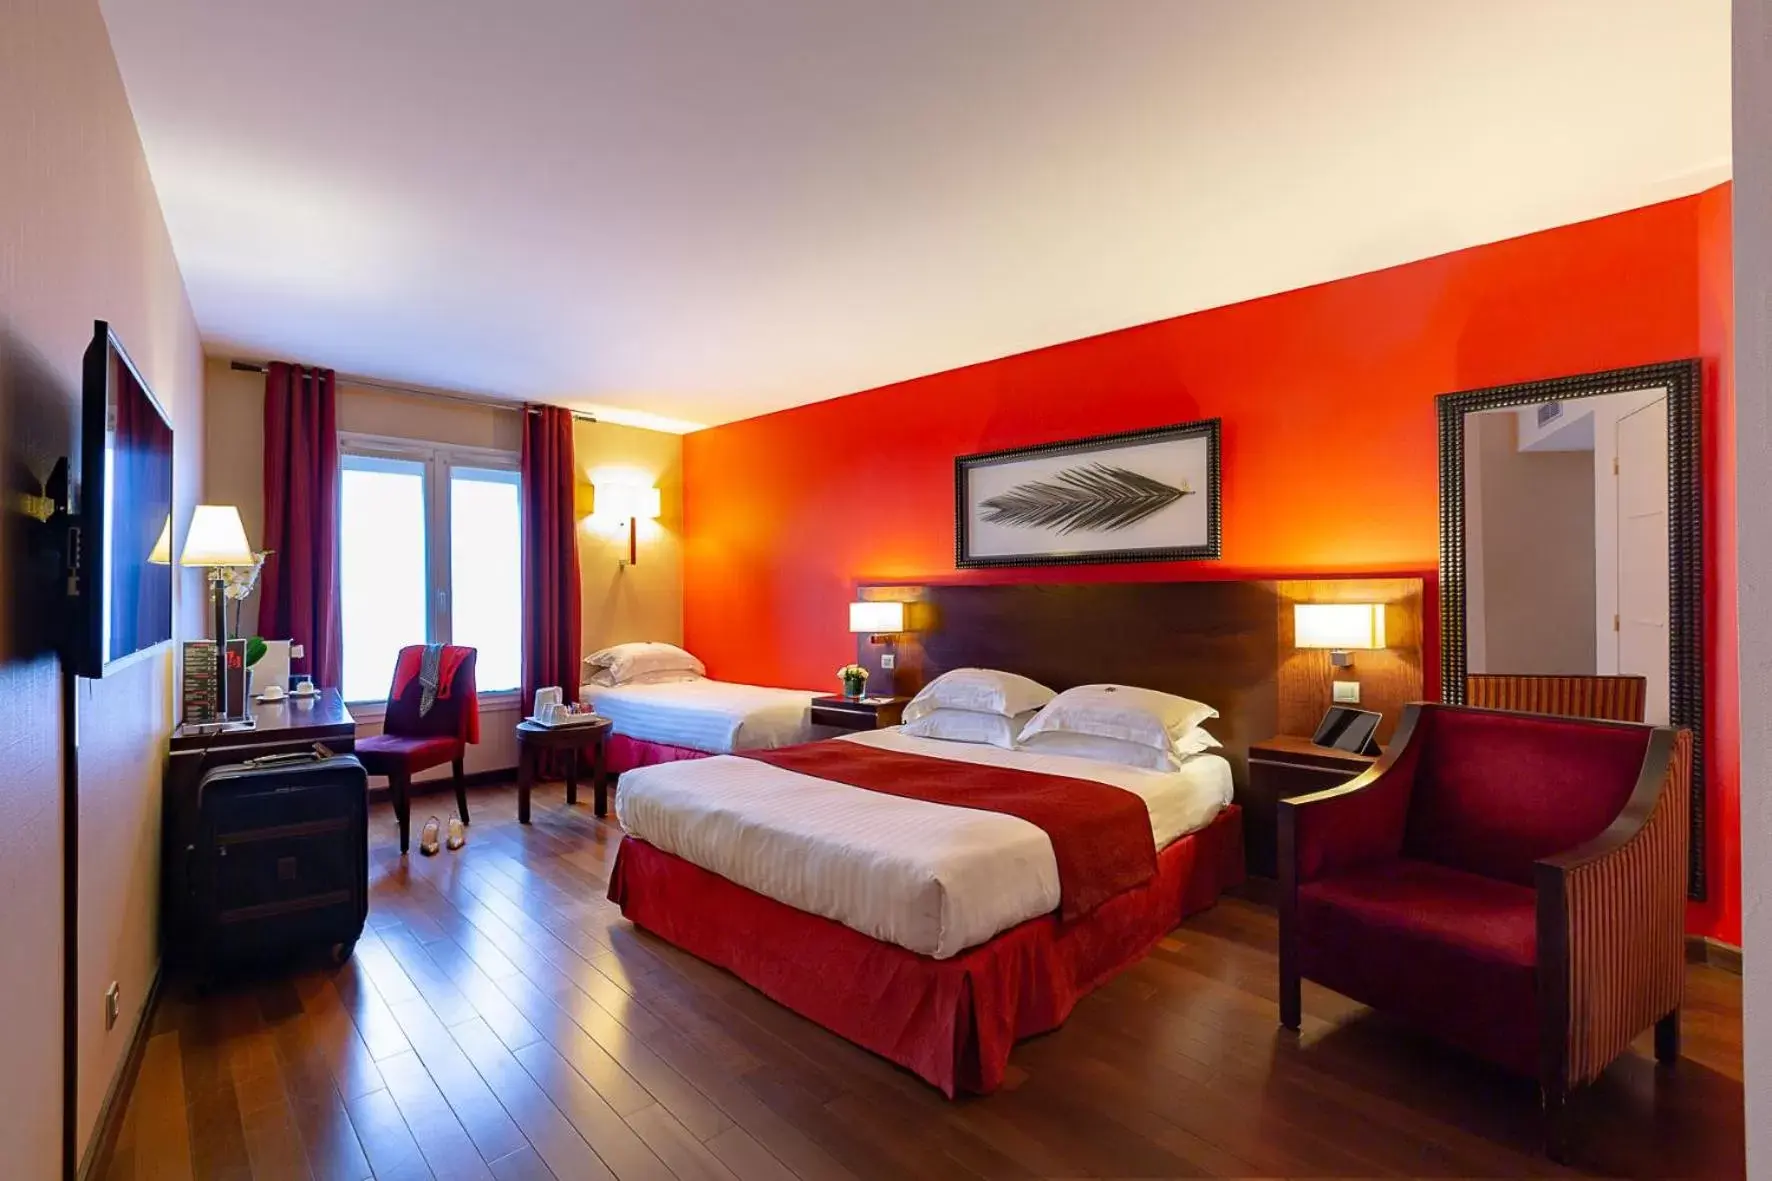 Photo of the whole room in Hotel de Berny